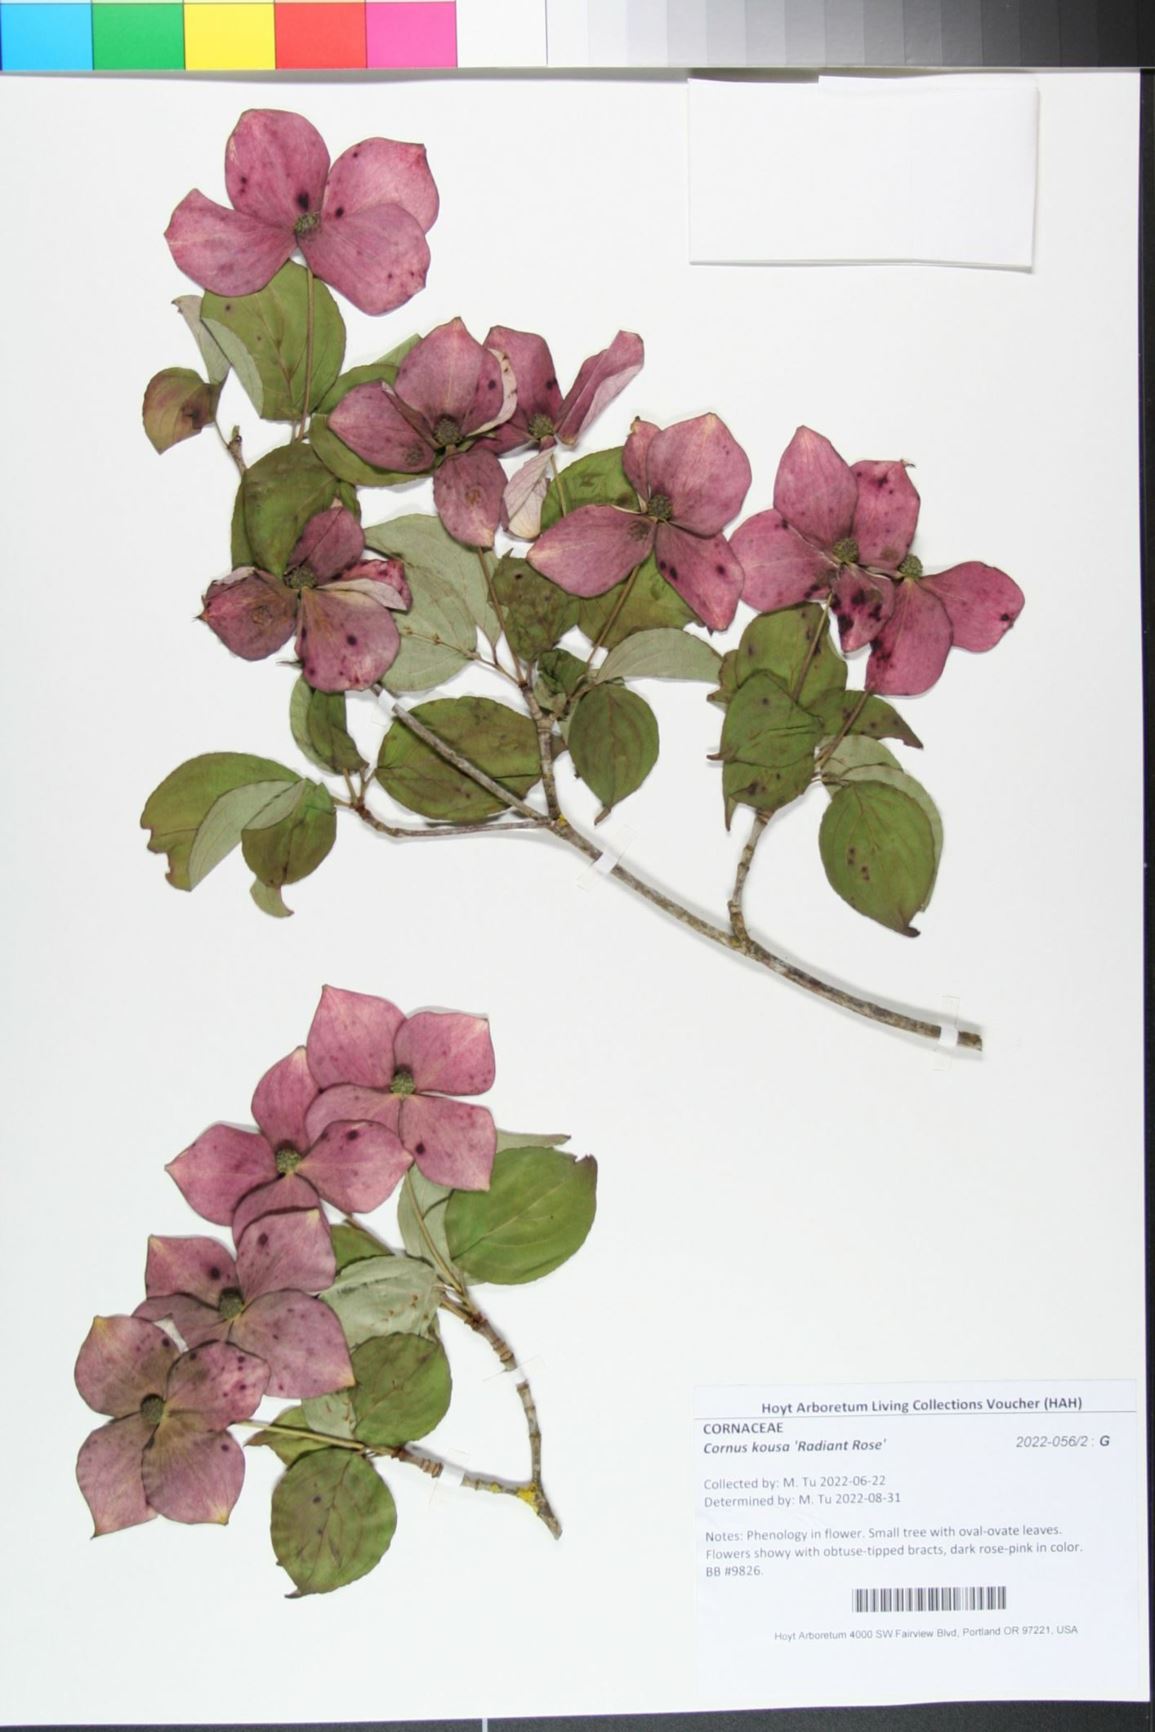 Cornus kousa 'Radiant Rose' - radiant rose dogwood